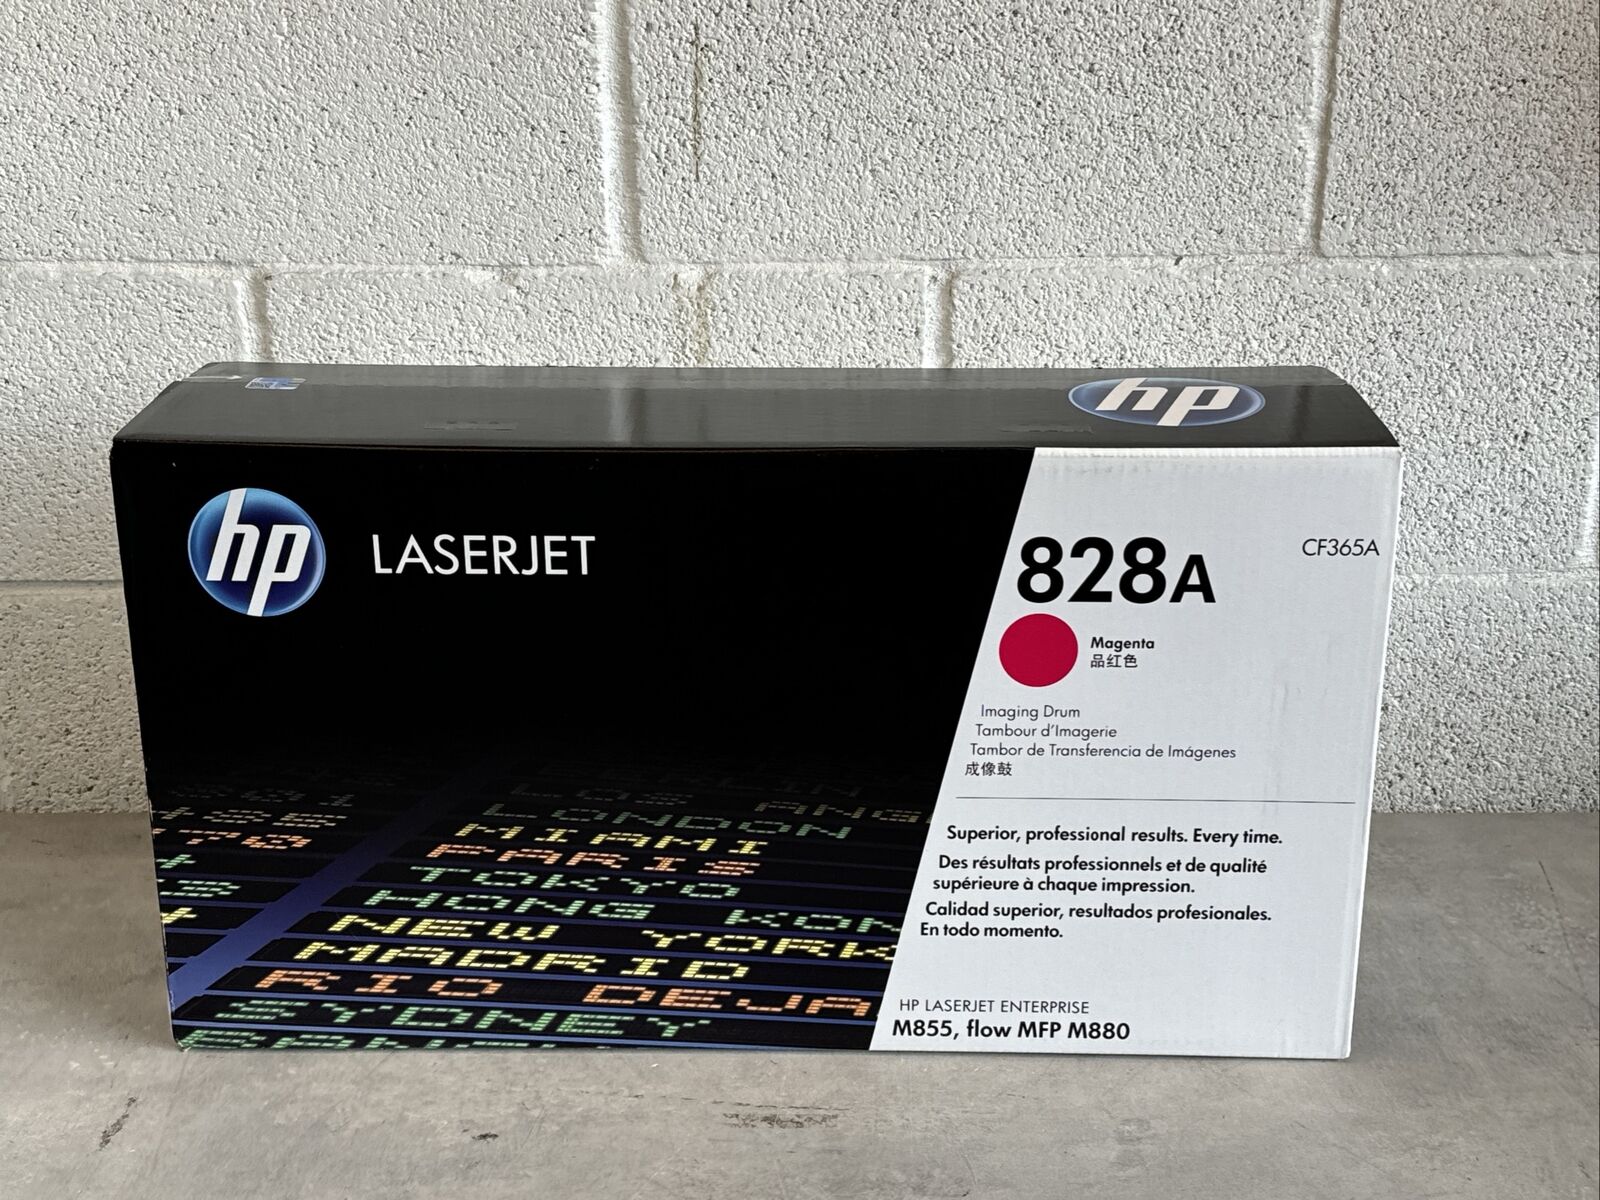 New Sealed - Genuine HP LaserJet 828A (CF365A) Magenta Drum Unit Toner